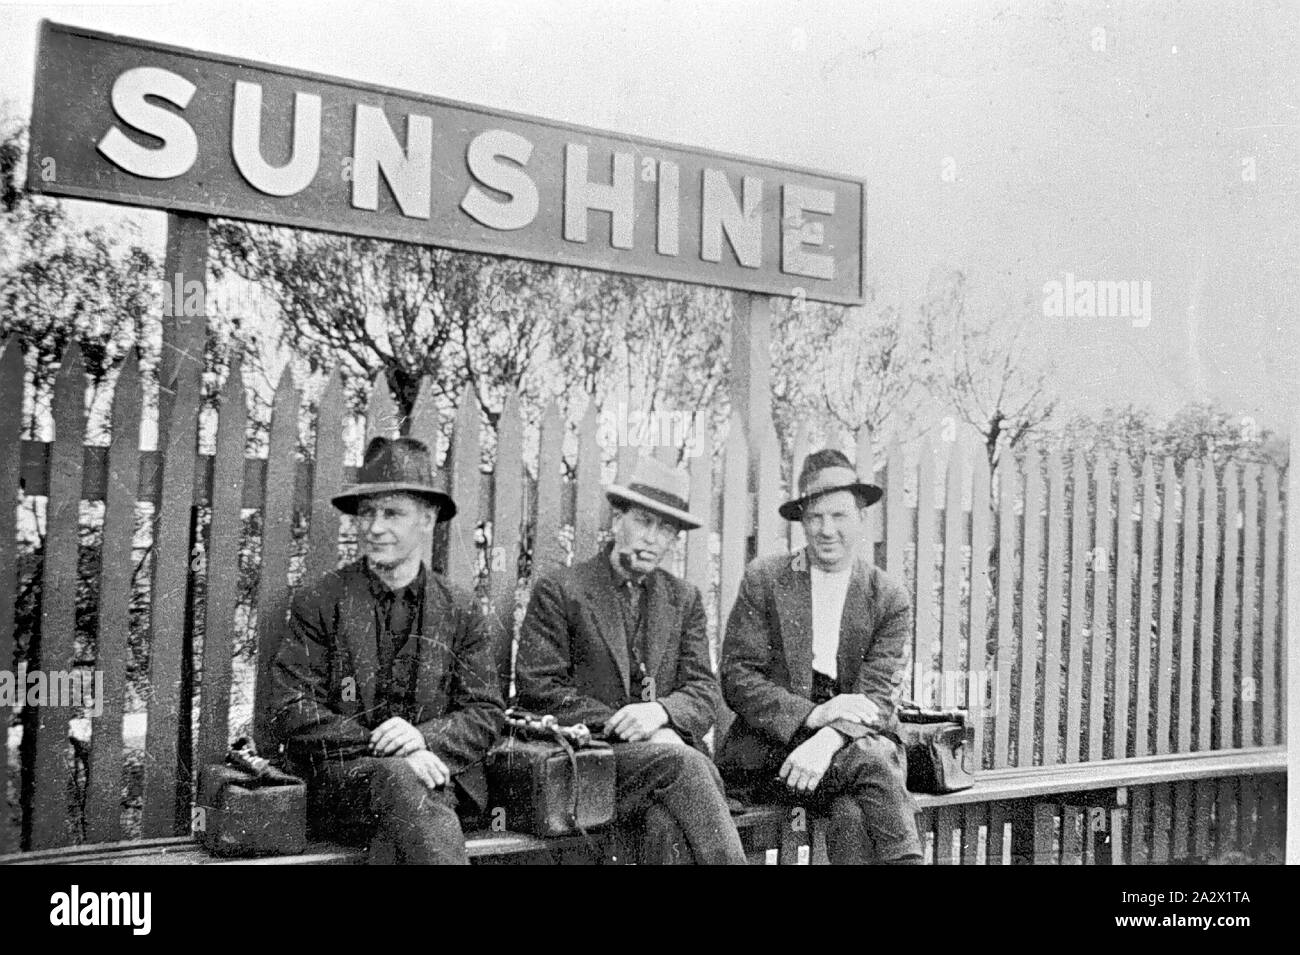 Negative - Sunshine Railway Station, 1928, Black and white photograph of three men seated at Sunshine Railway Station in 1928 Stock Photo